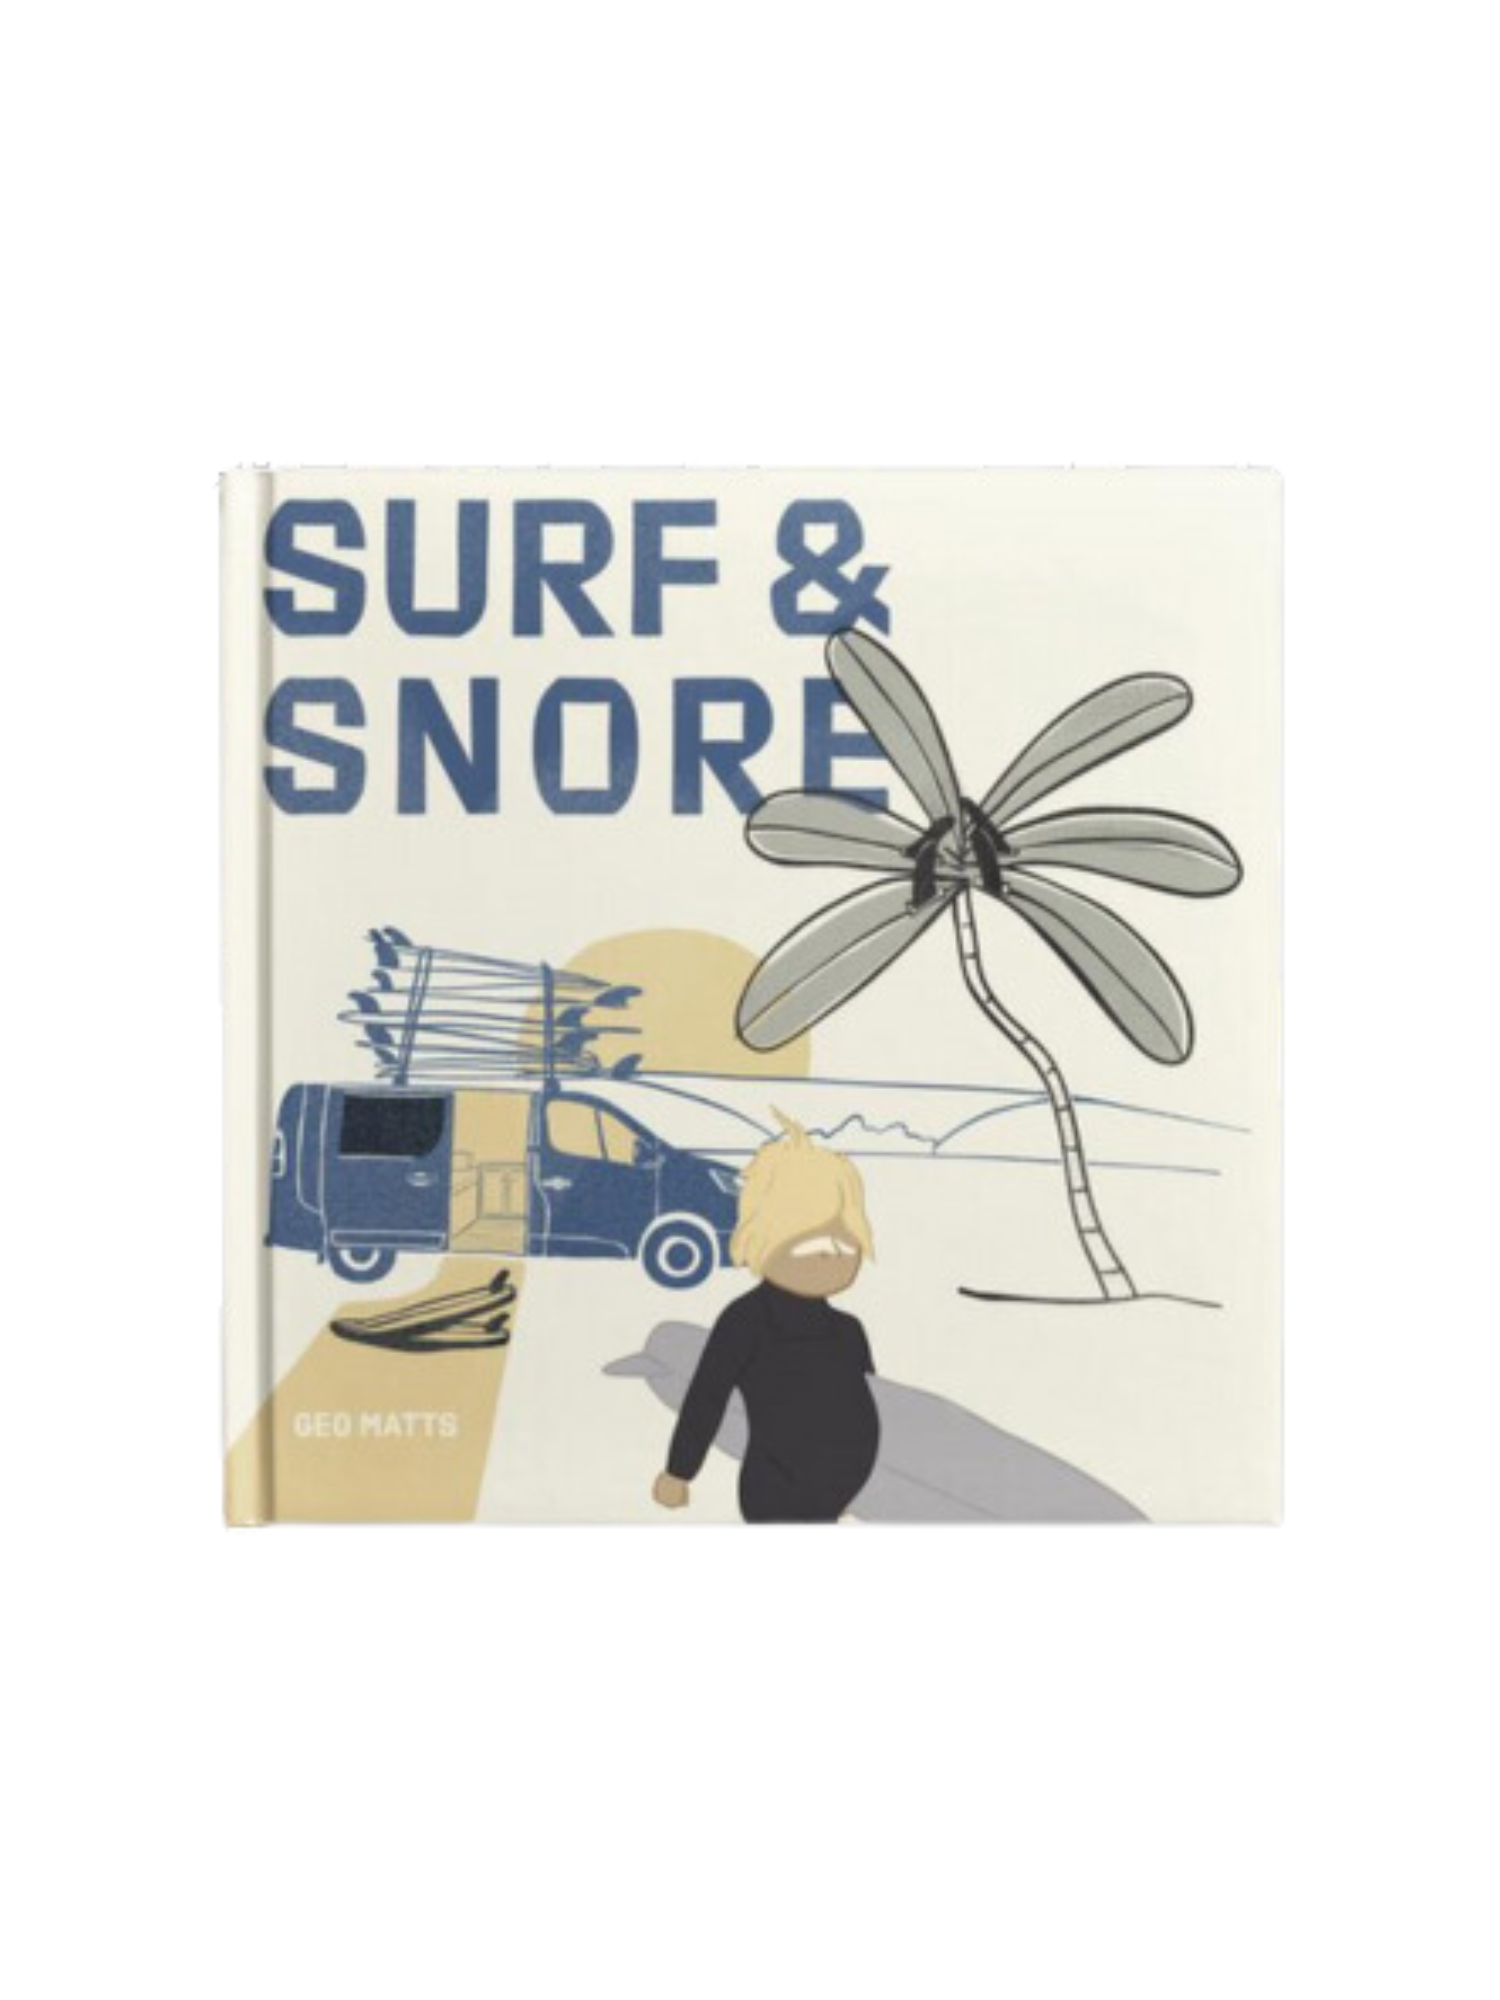 Surf & Snore by Geo Matts | Keel Surf & Supply